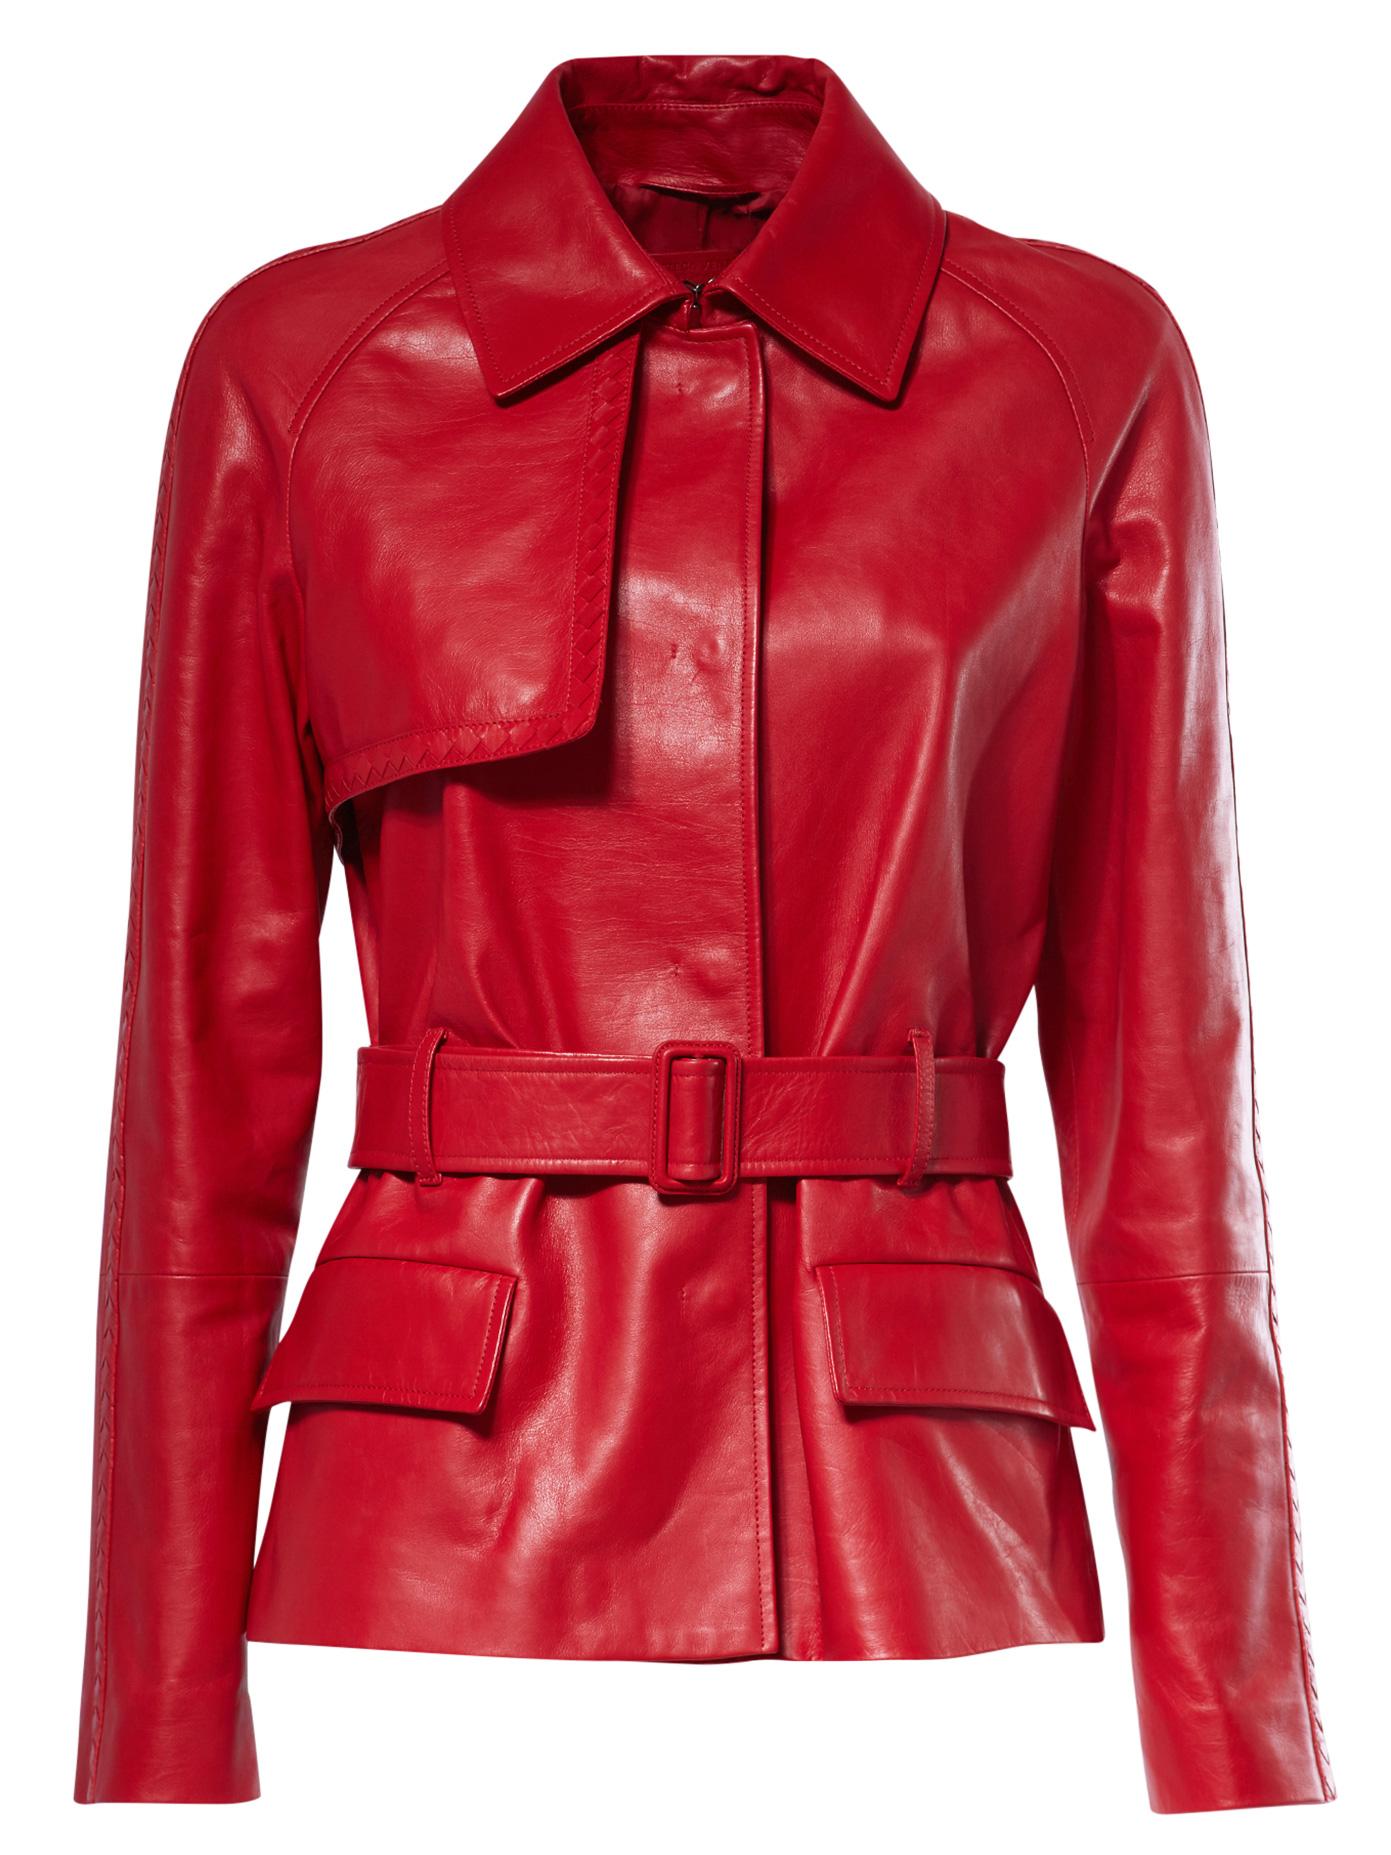 Bottega veneta Belted Leather Jacket in Red | Lyst